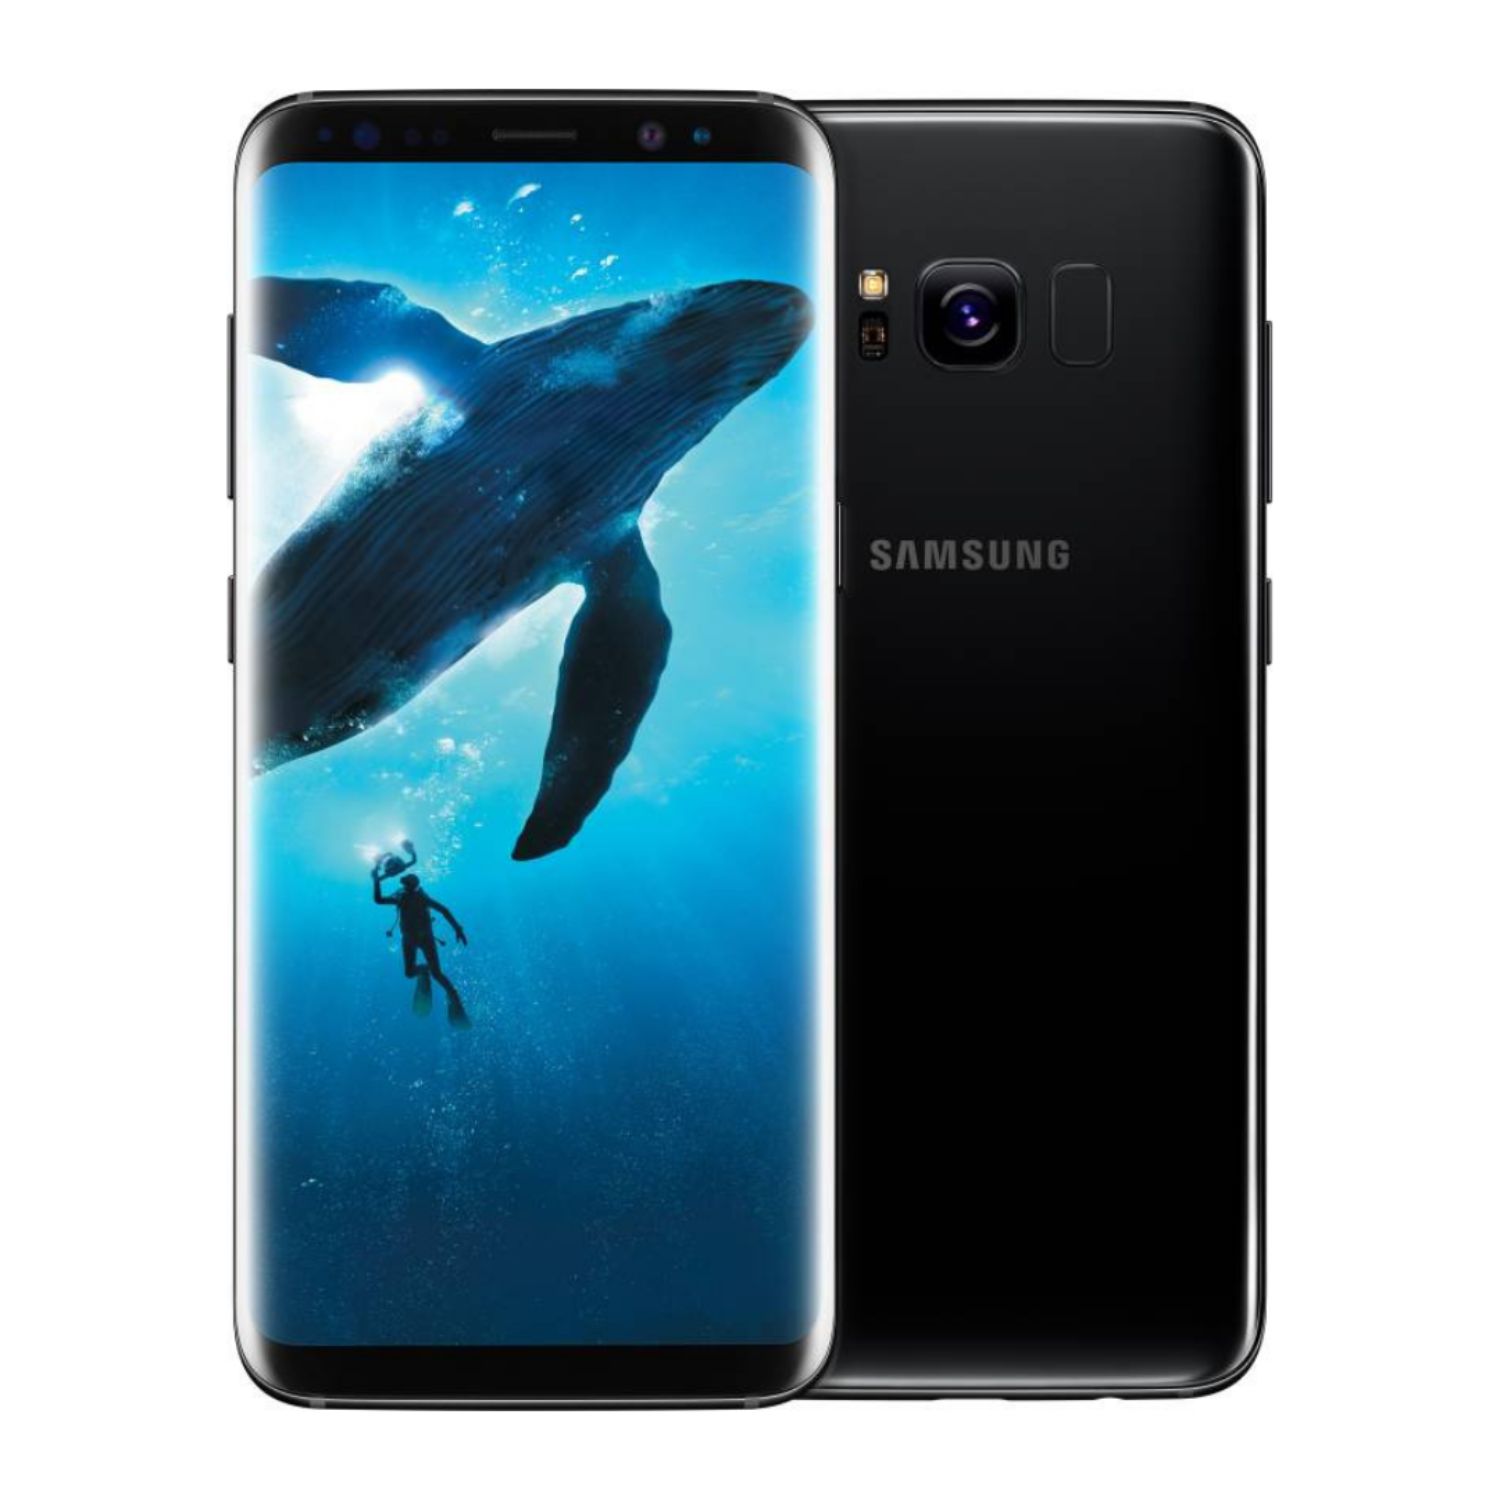 Samsung Galaxy s8 Plus